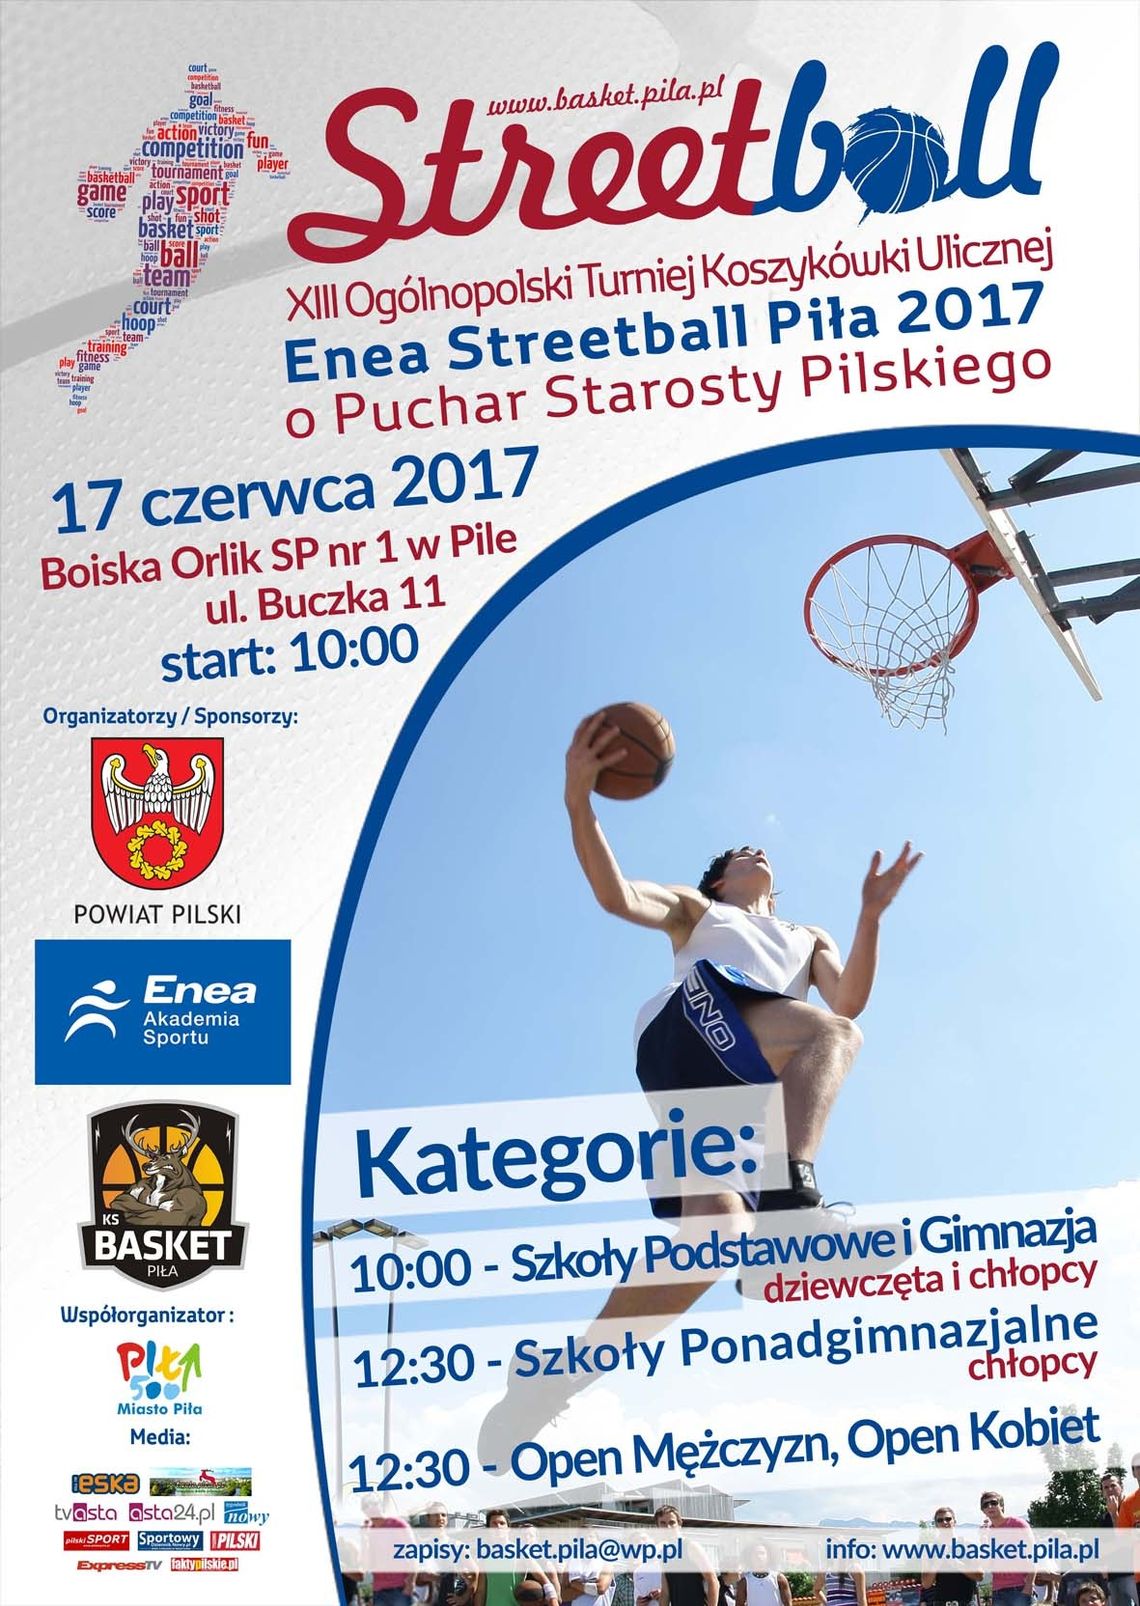 "Enea Streetball Piła 2017"